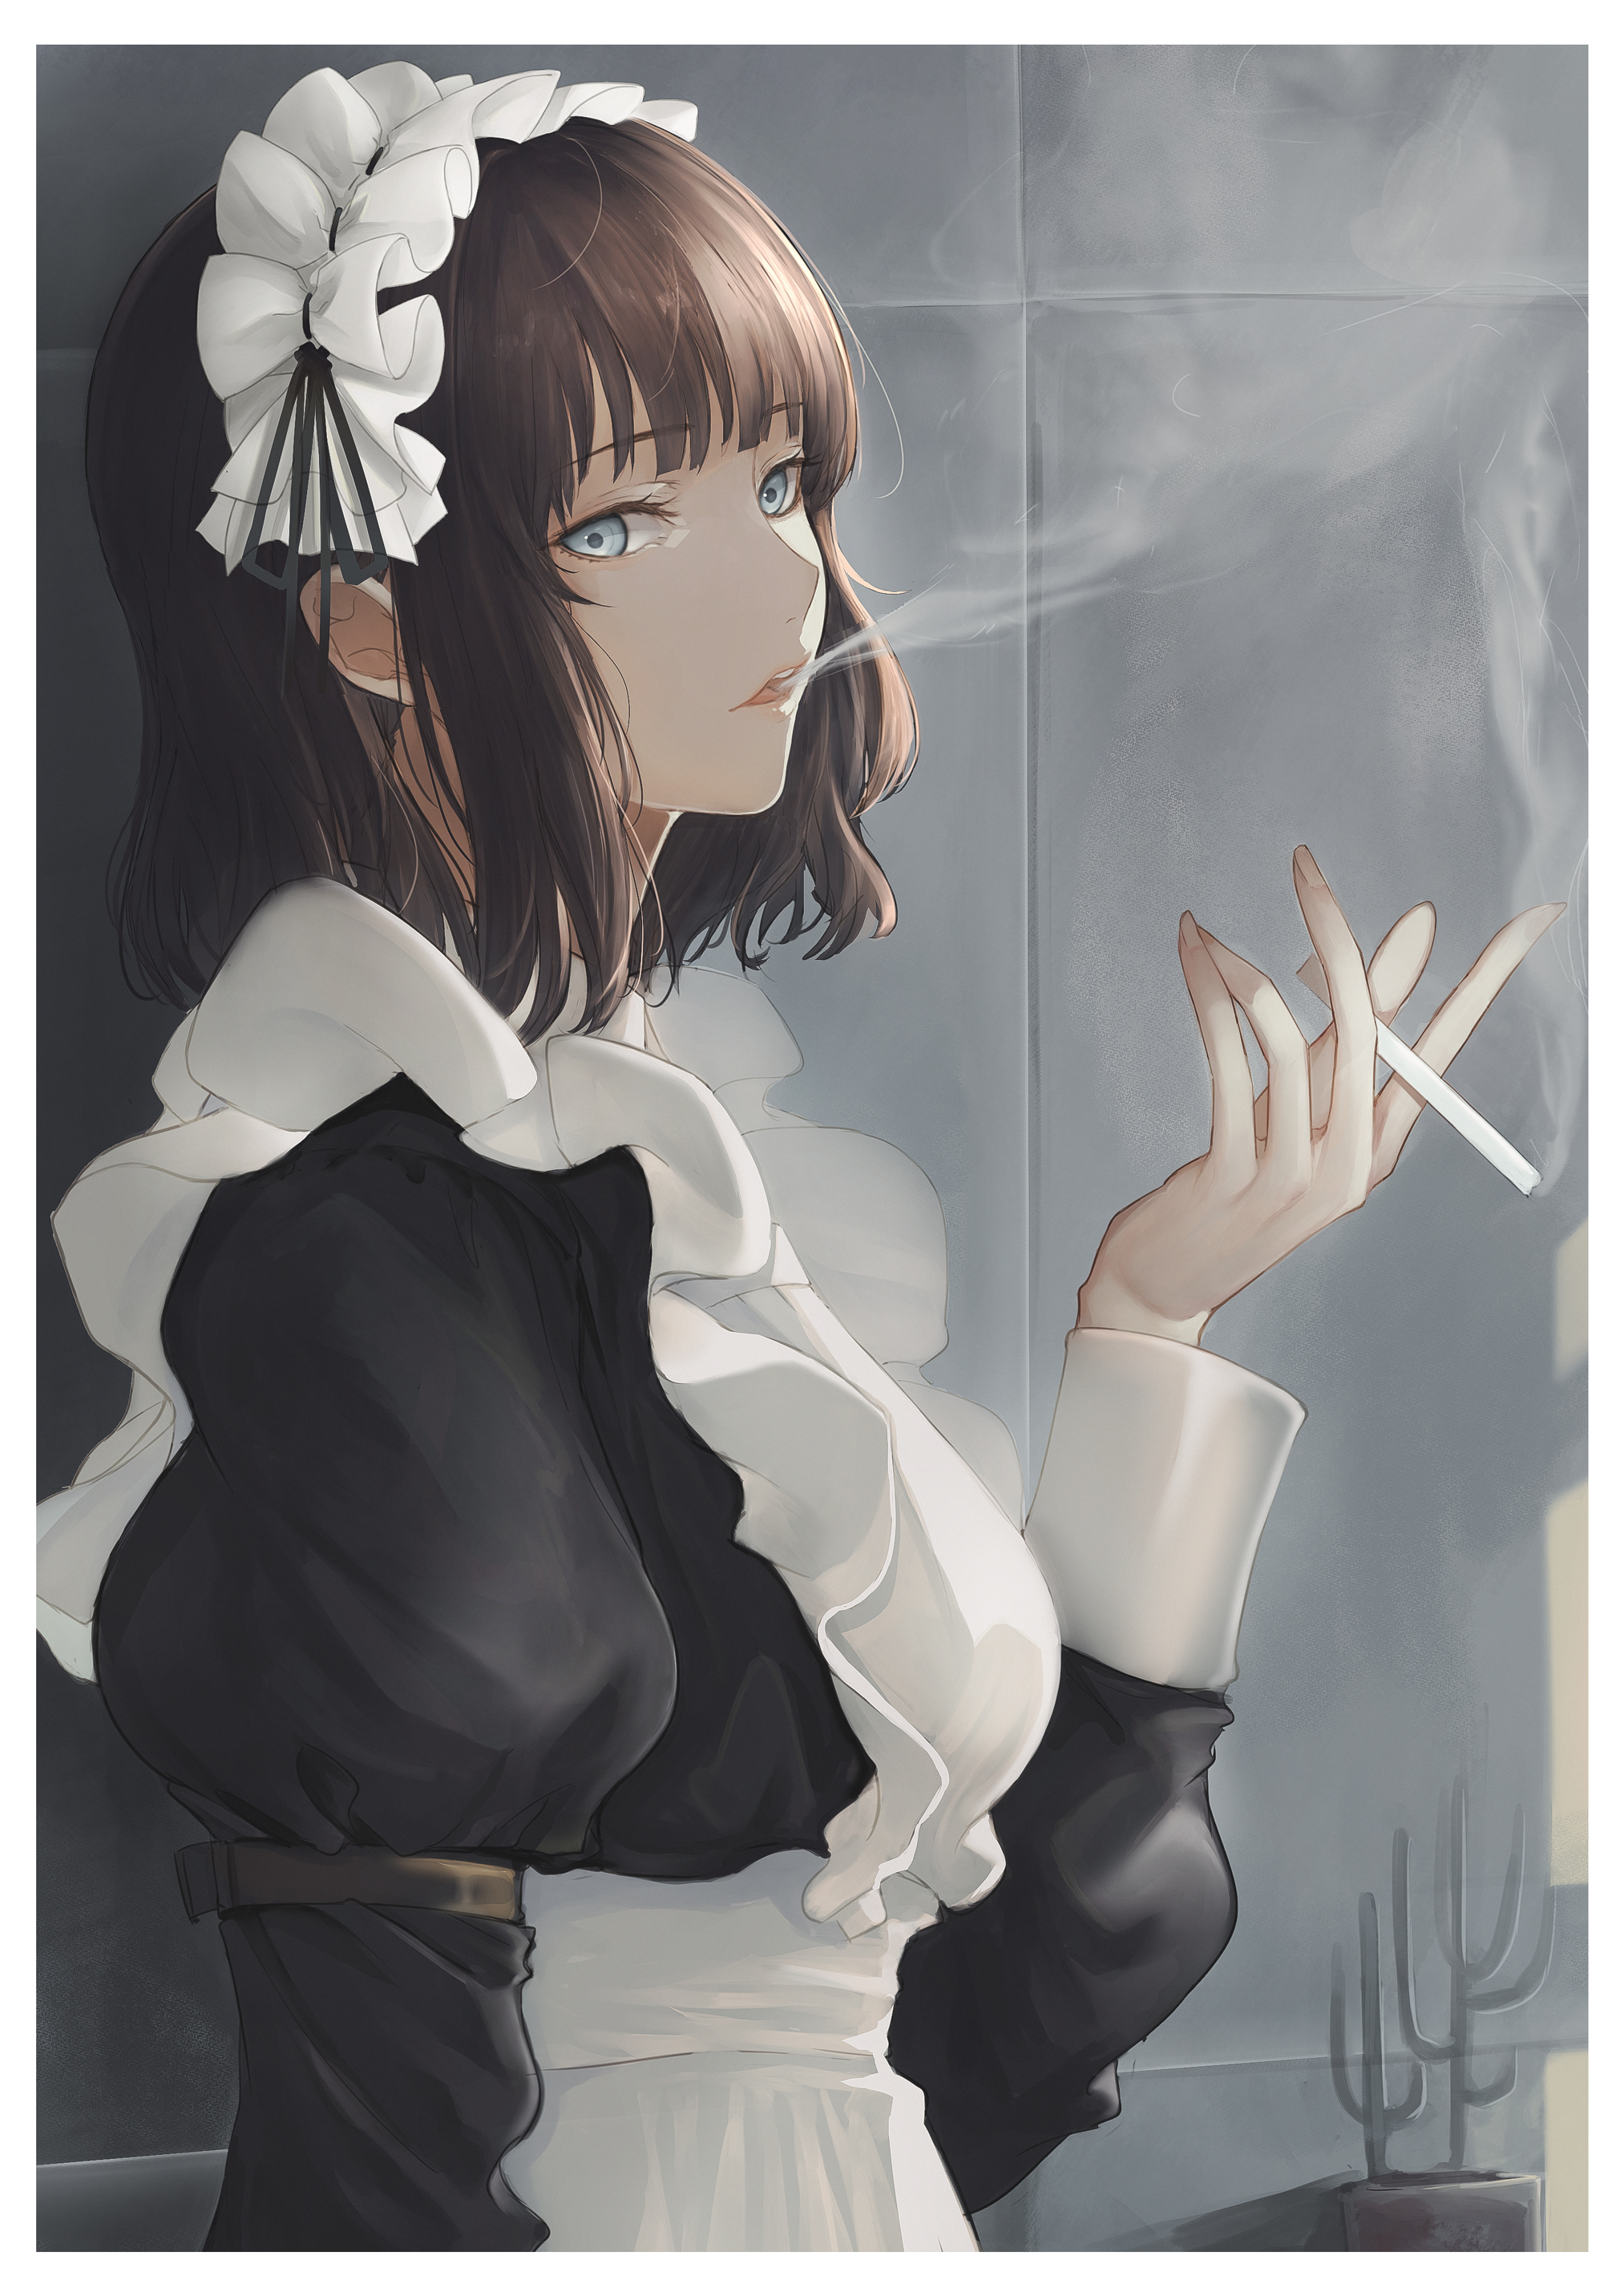 Anime Anime Girls Digital Art Artwork 2D Portrait Display Vertical Smoking Cigarettes Maid Maid Outf 2026x2865